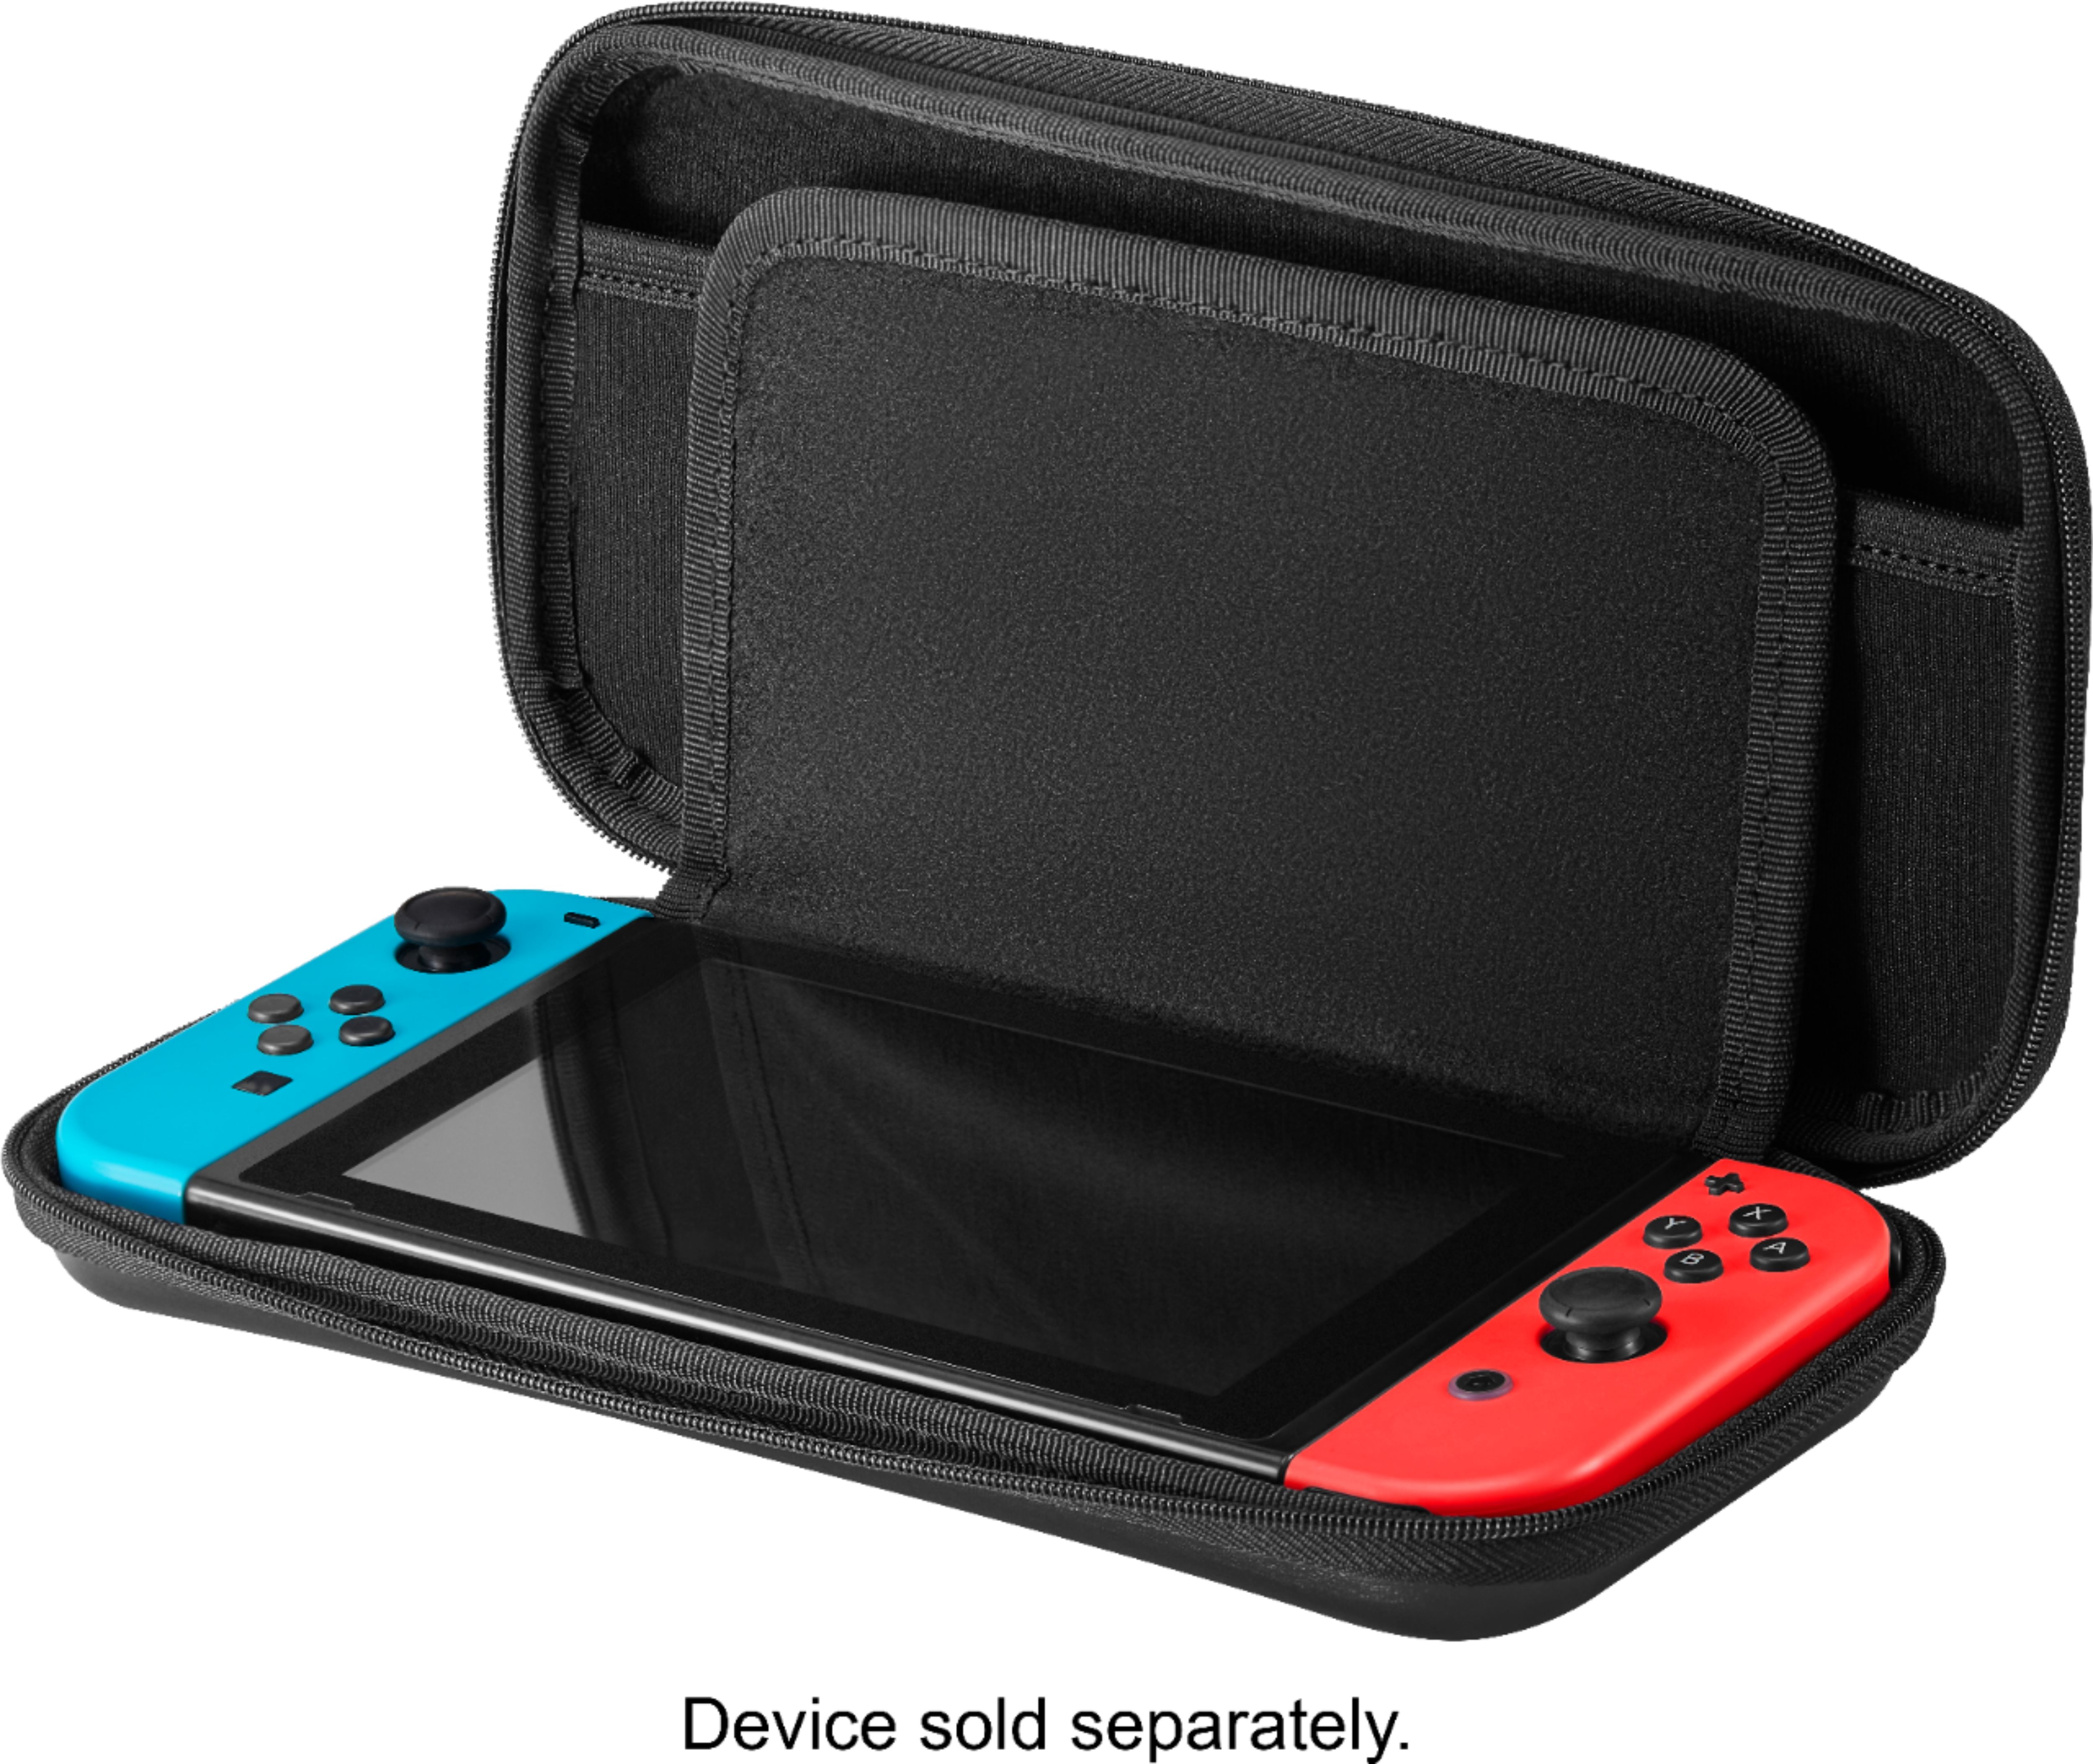 nintendo switch carrying case best buy